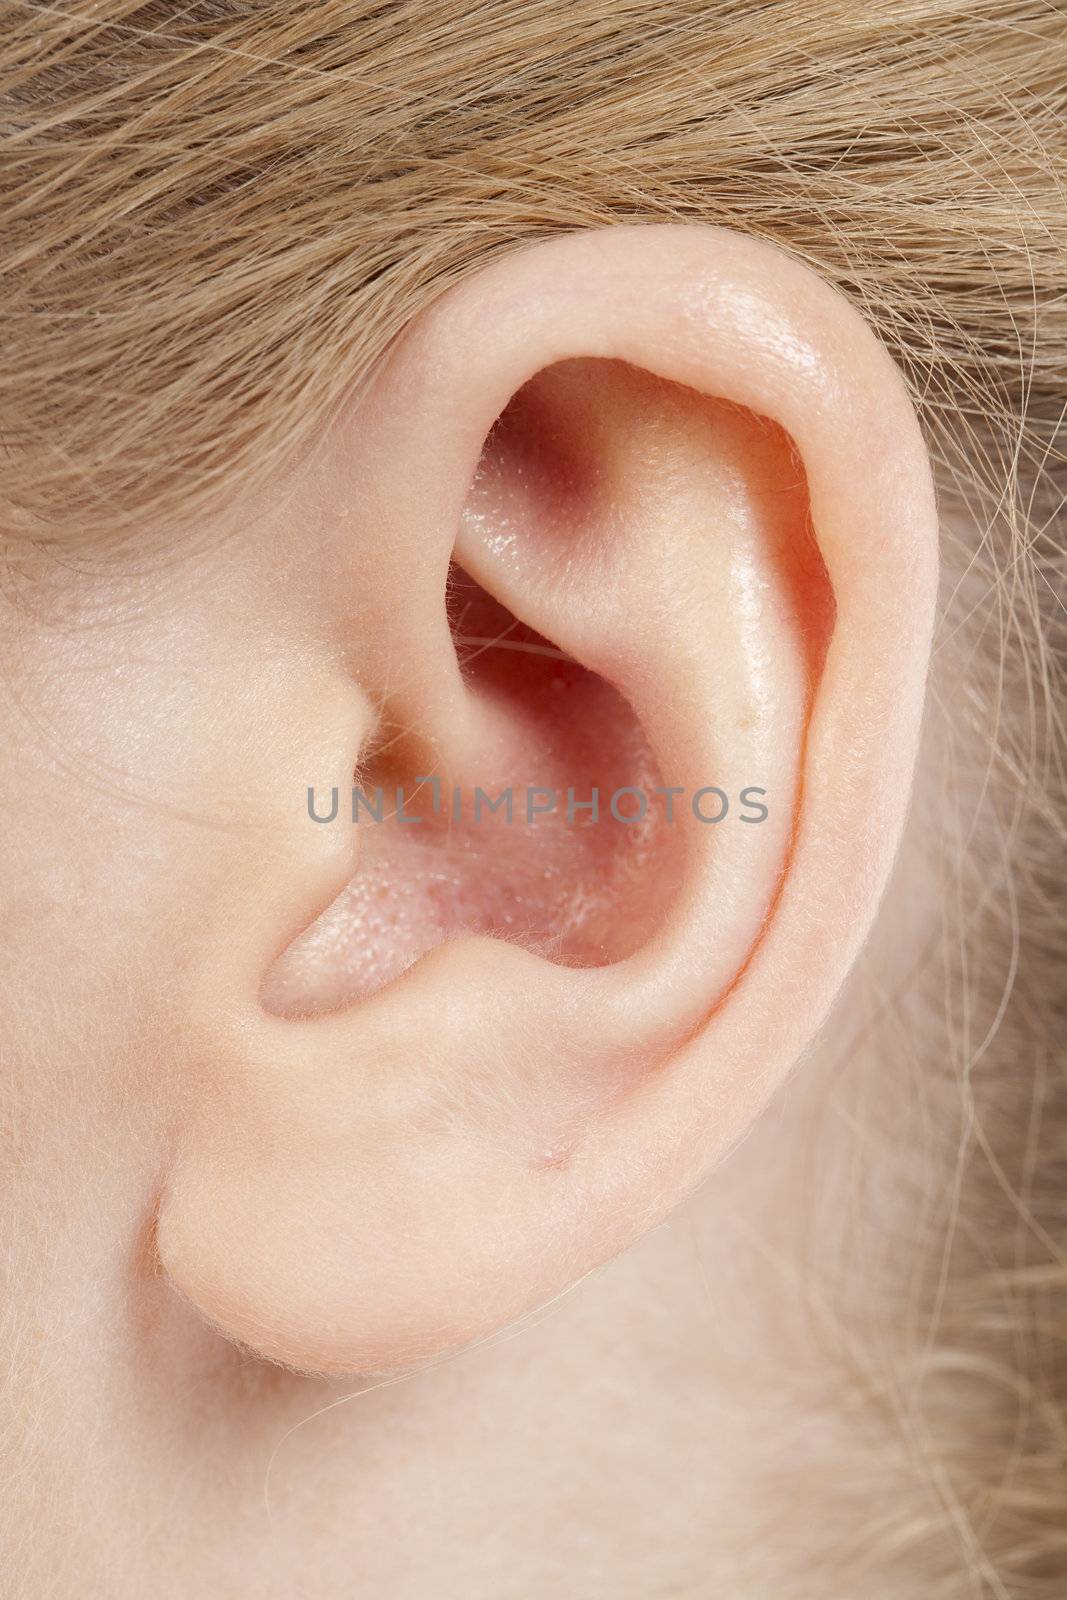 Close up image of female ear